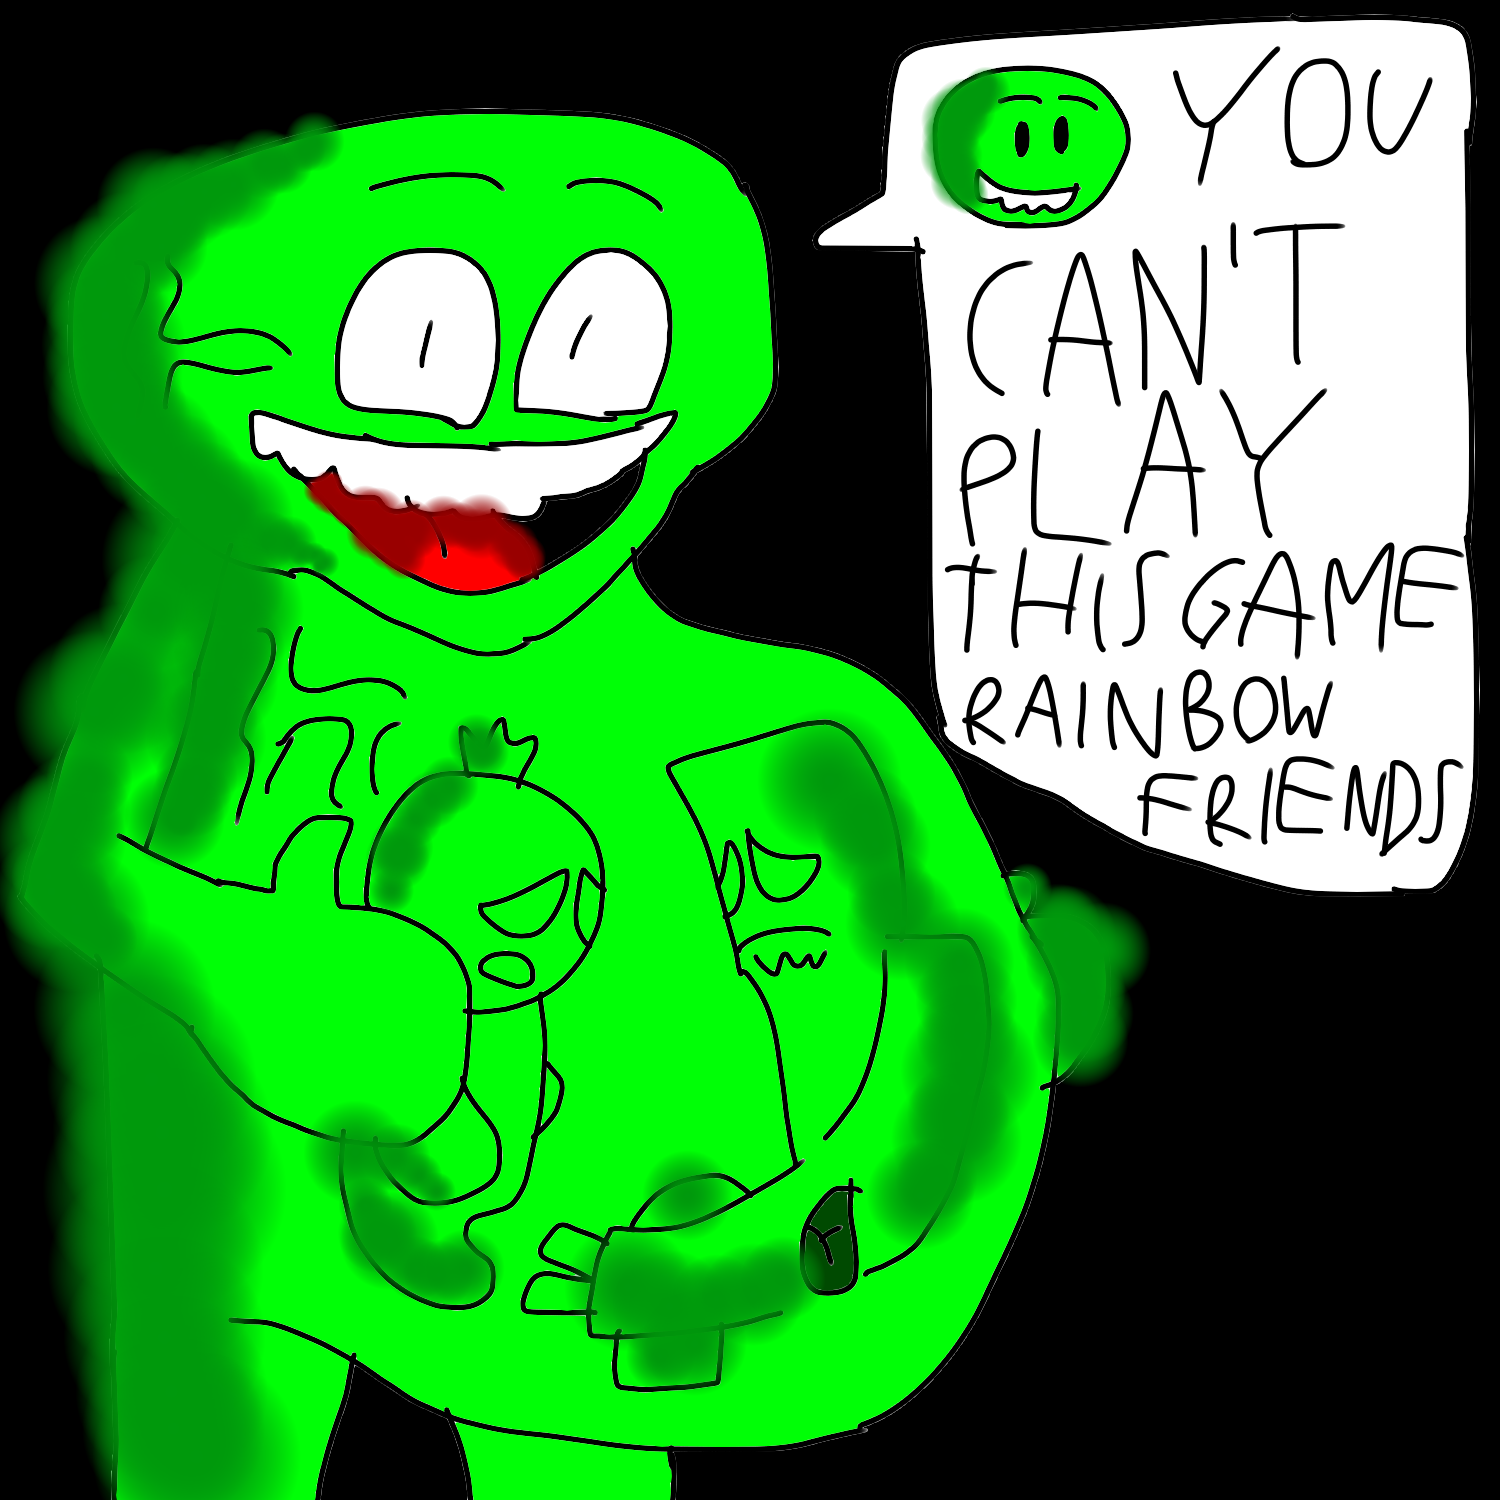 RAINBOW FRIENDS vs JUMBO JOSH in Garten of Banban (Minecraft Animation) 